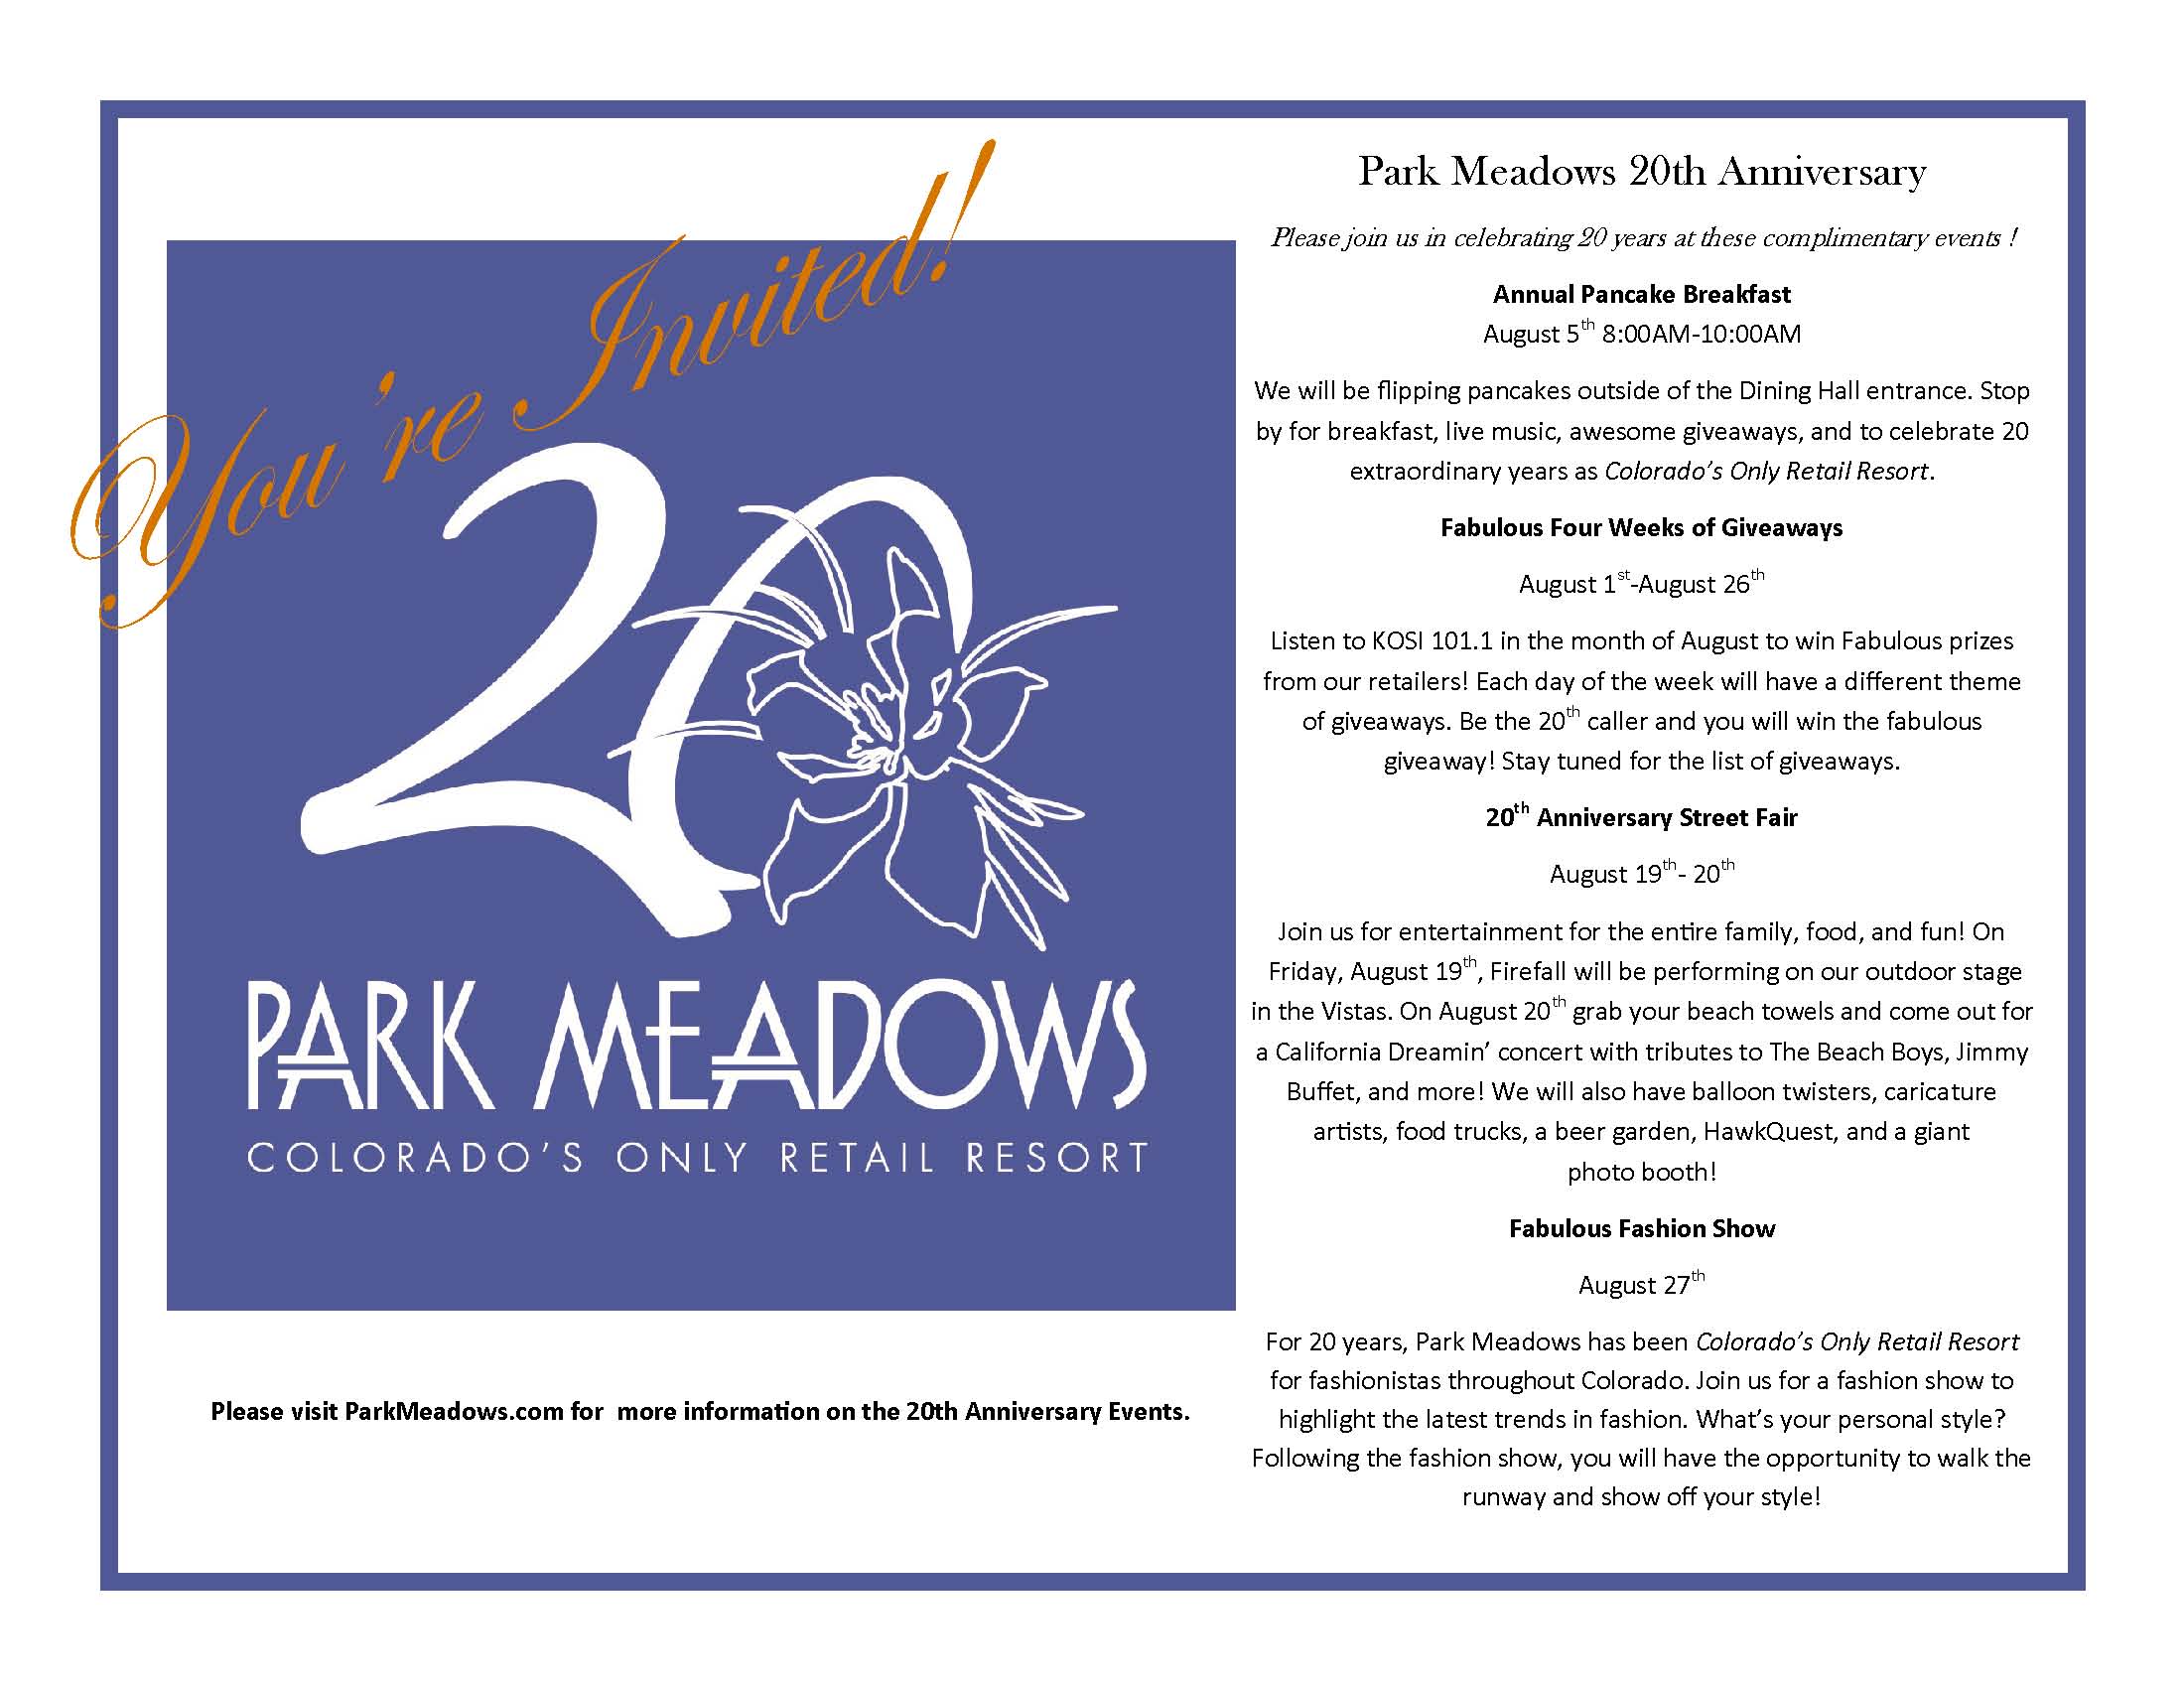 Park Meadows Retail Resort